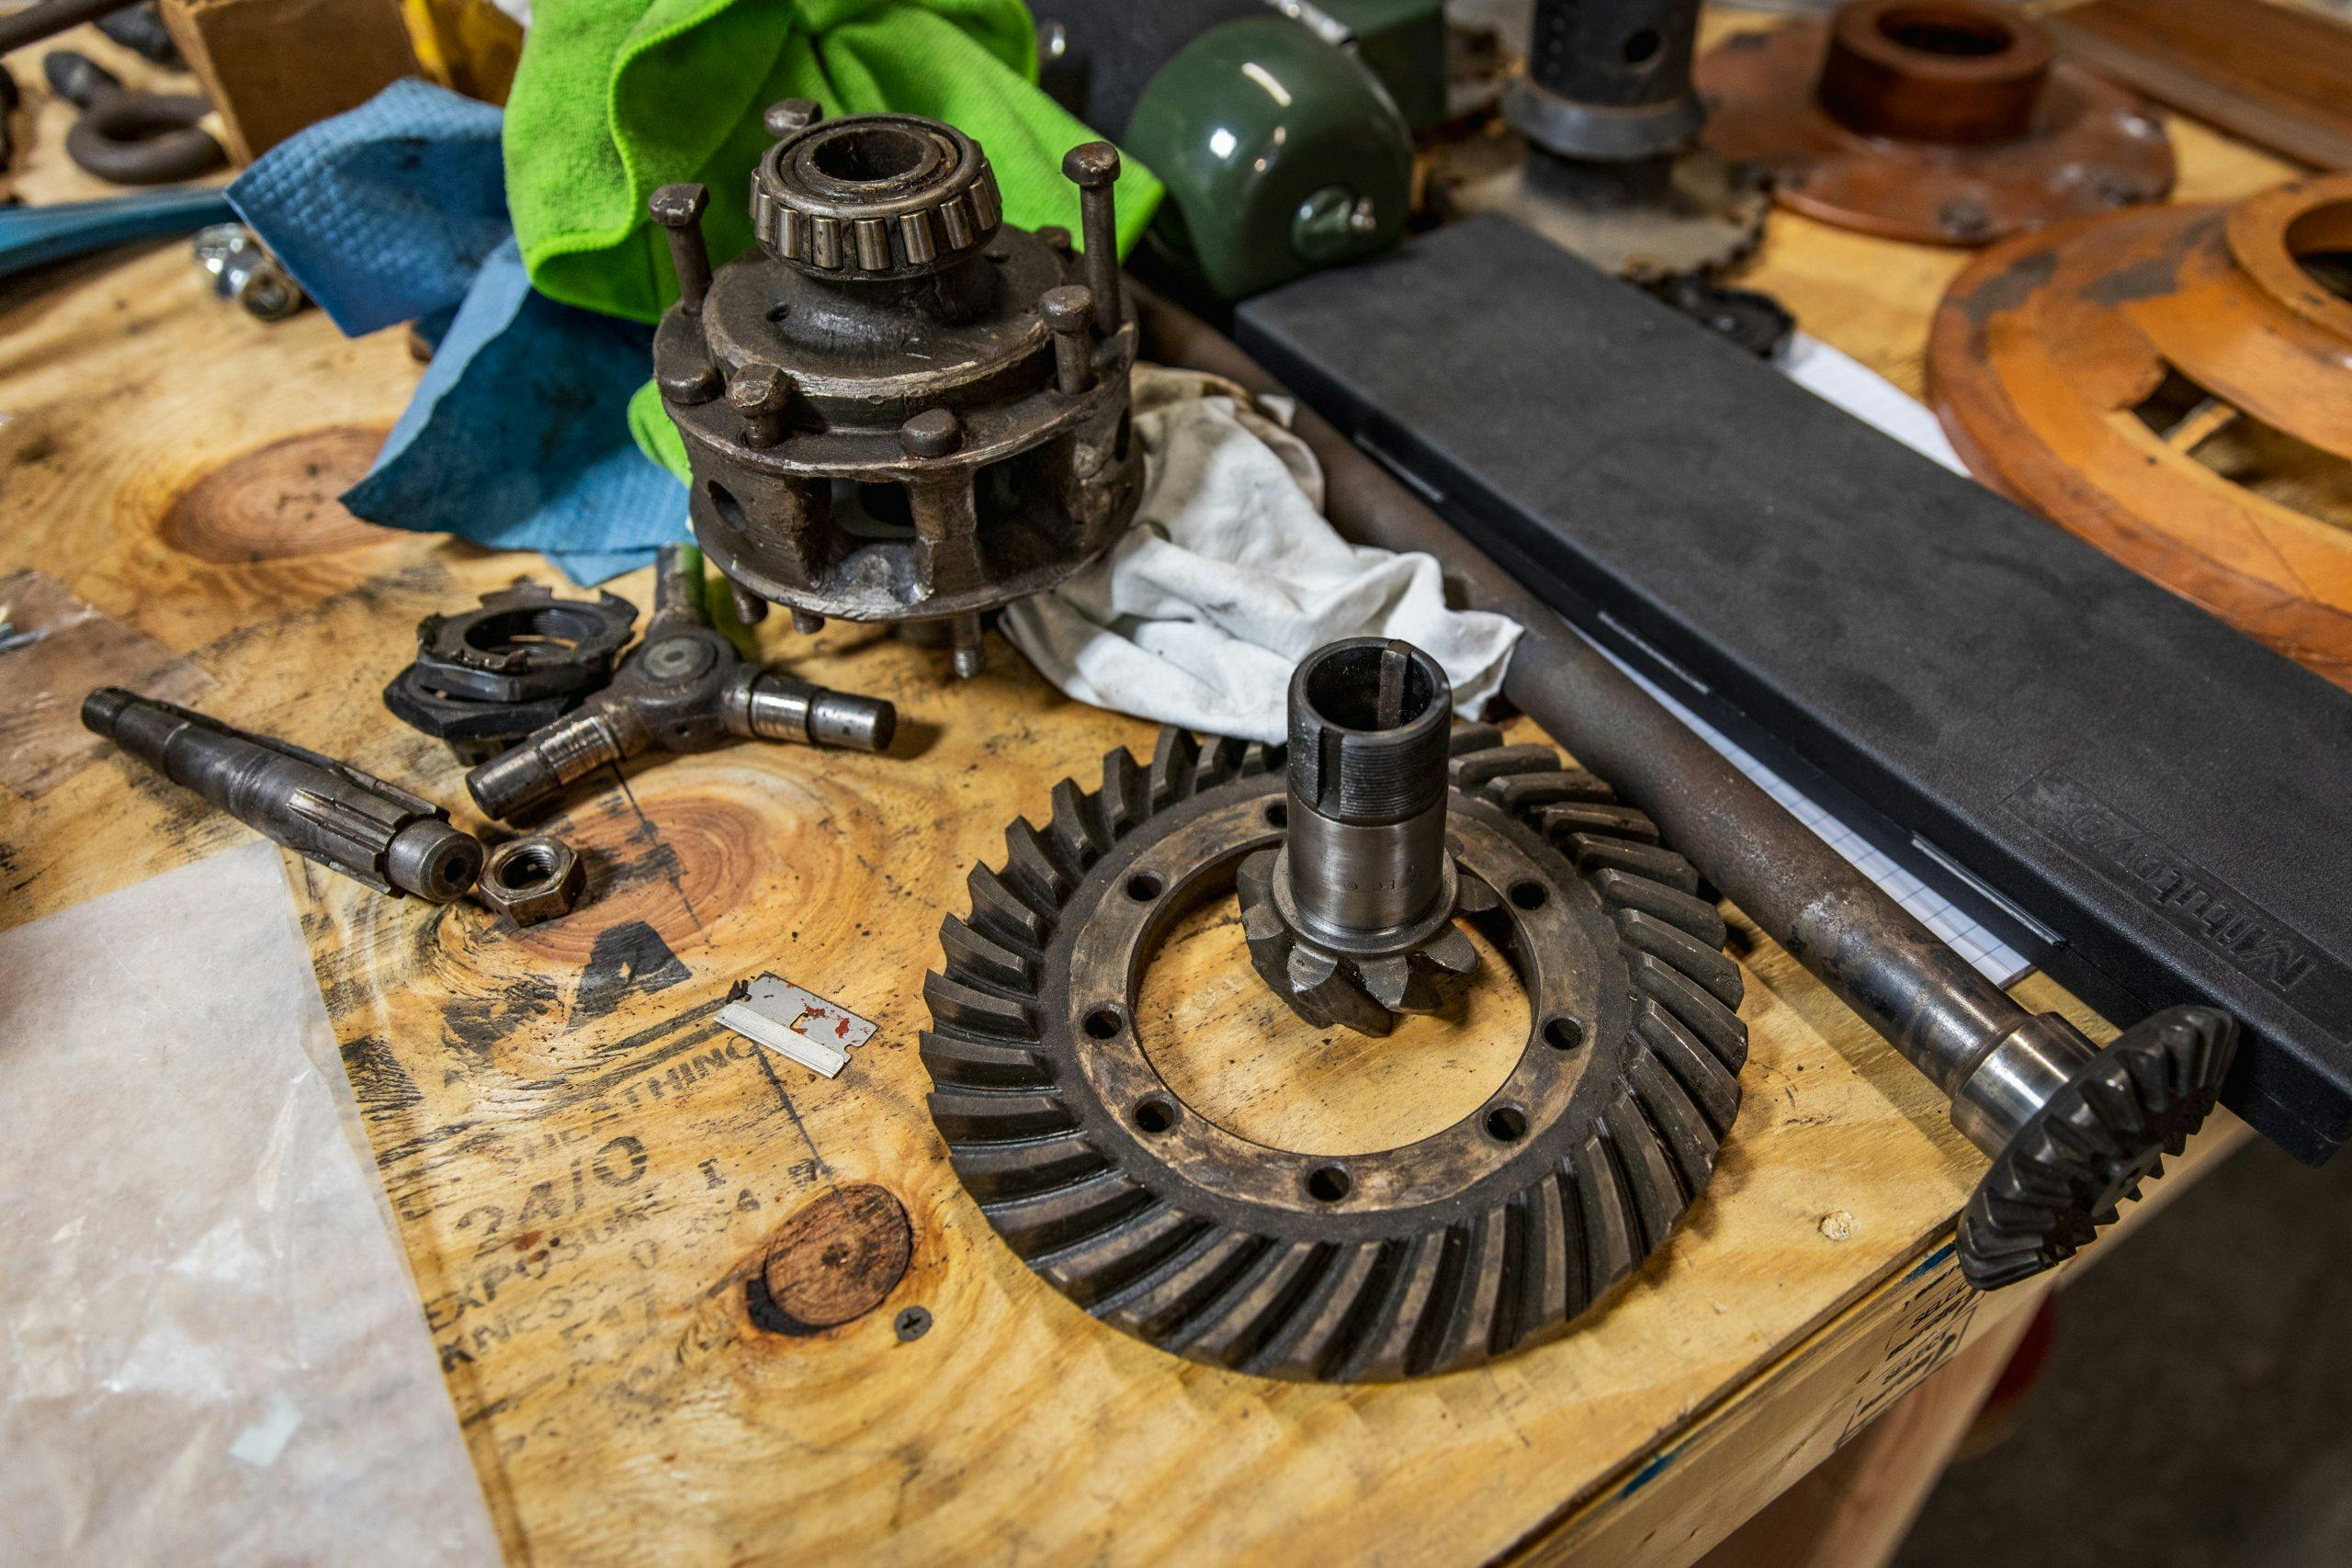 machine shop parts on table